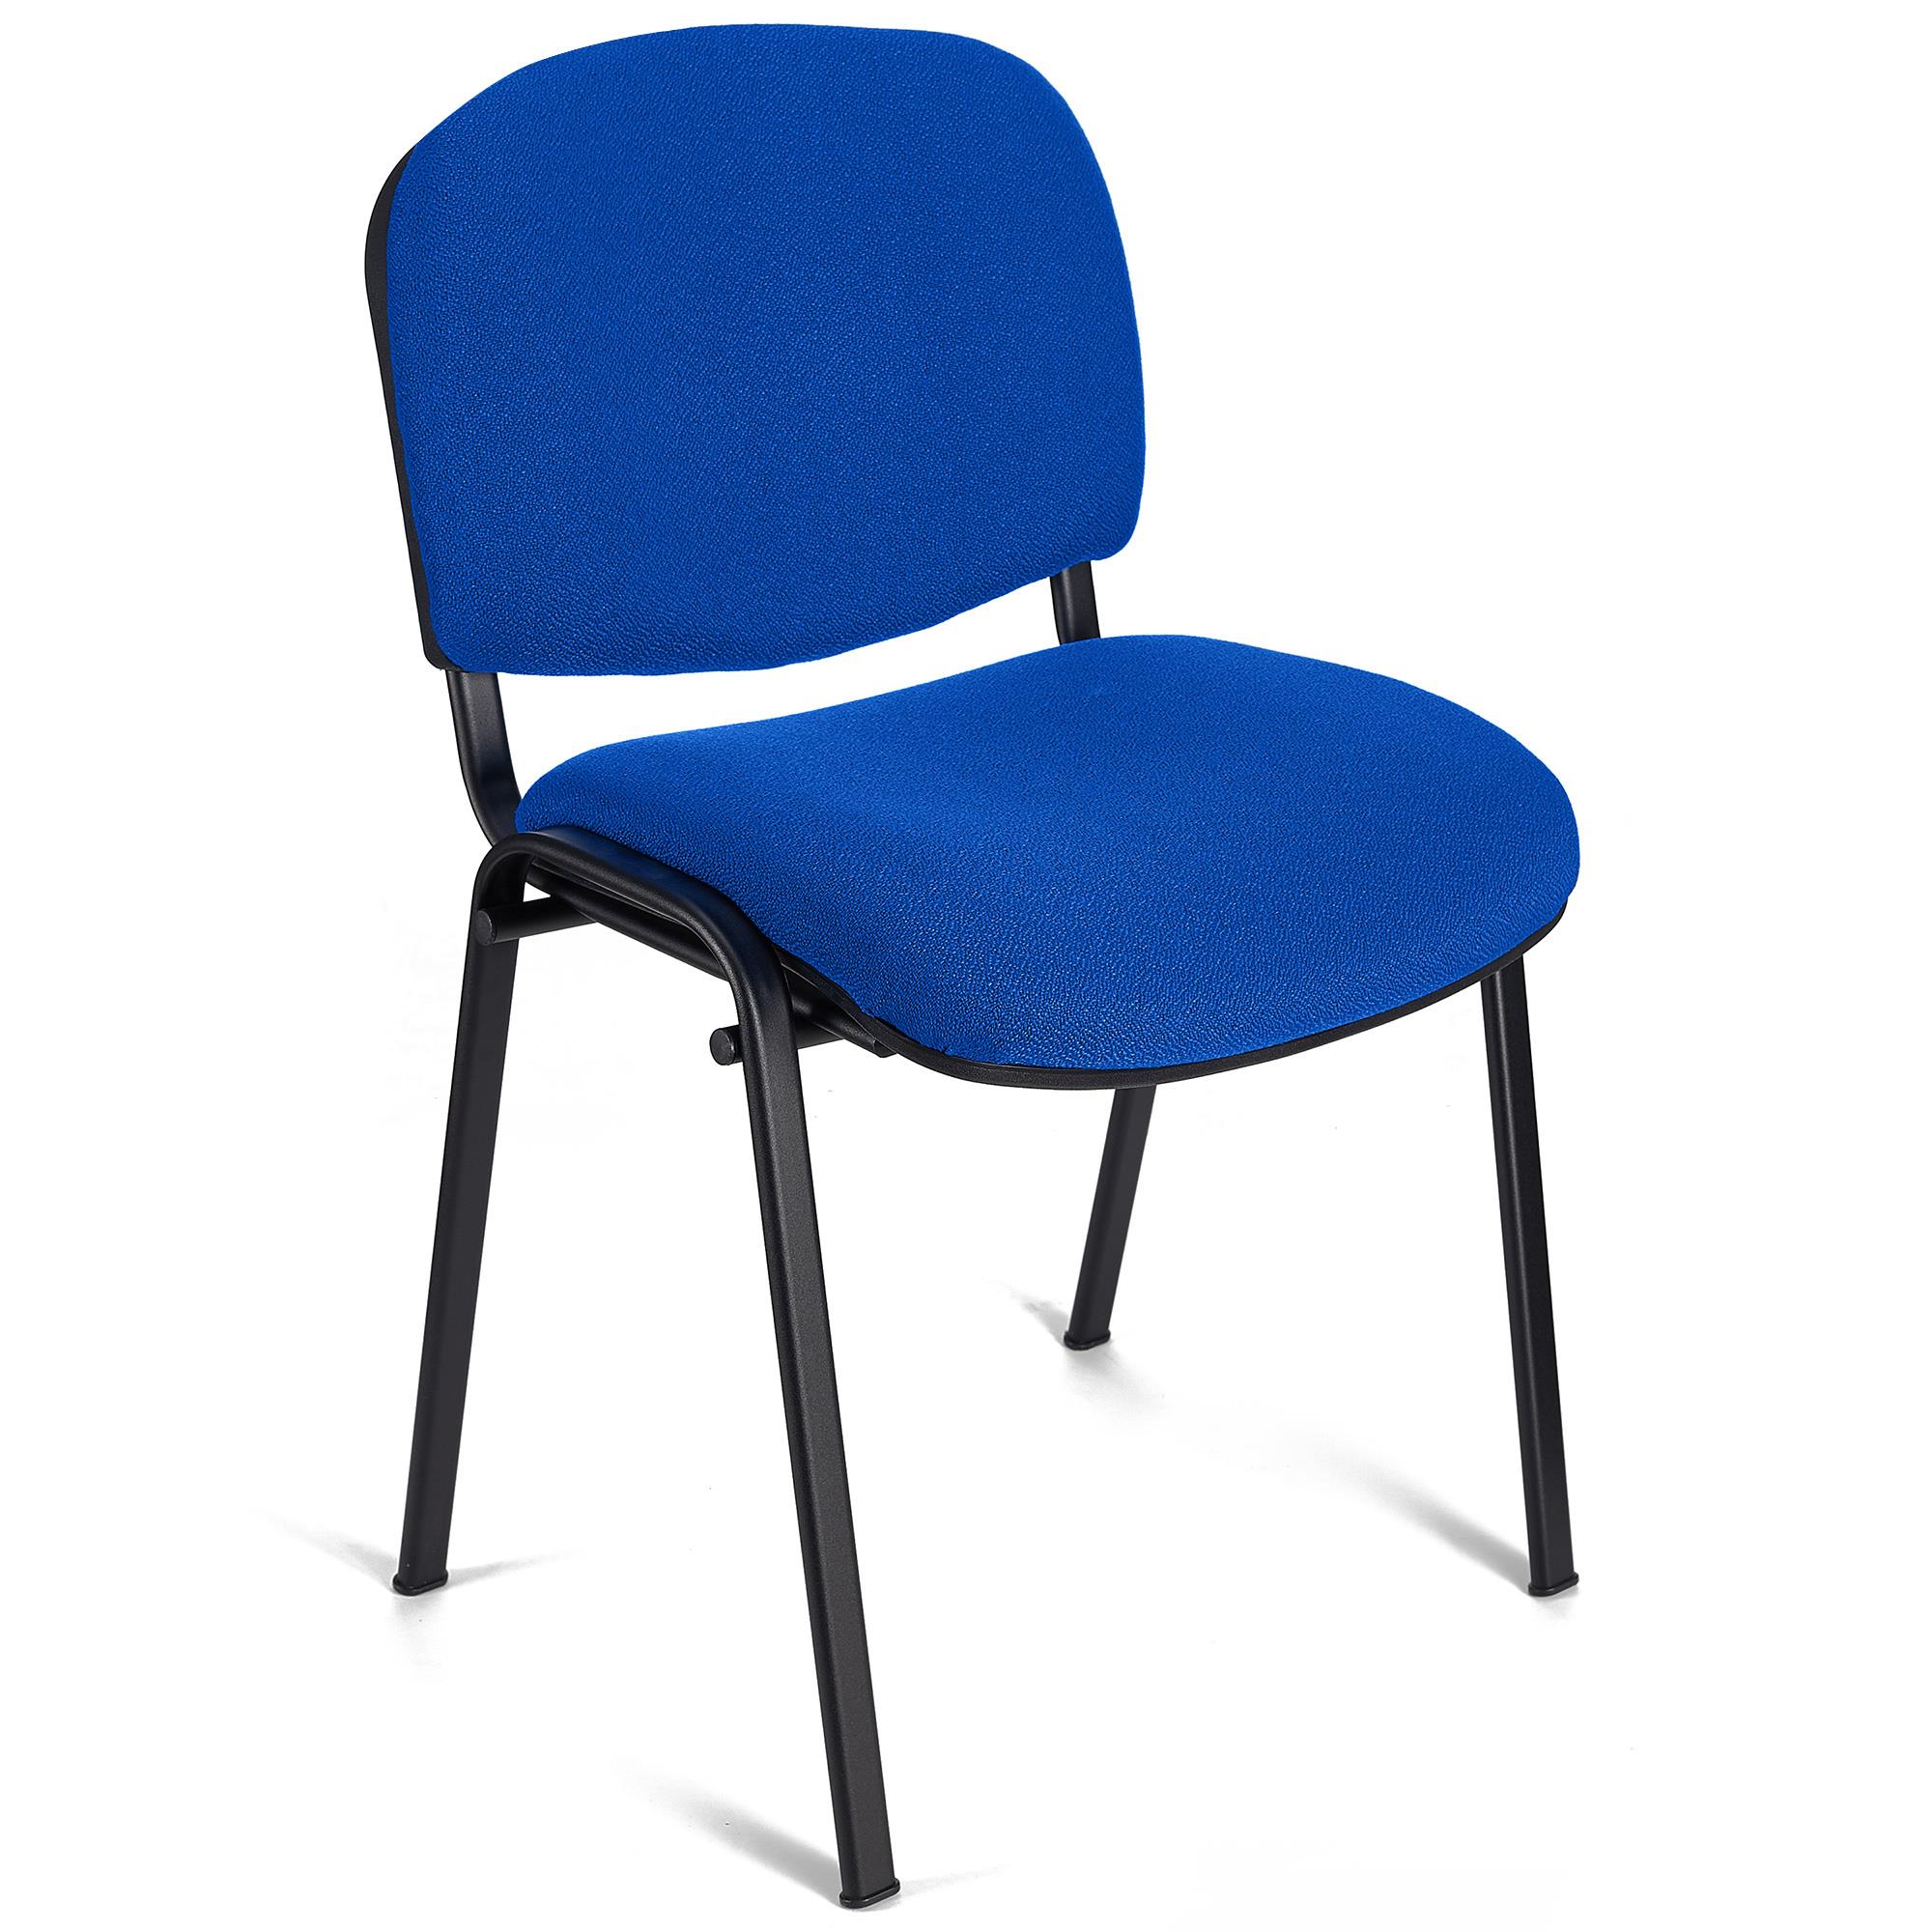 Cadeira de Visita MOBY BASE, Confortável e Prática, Pernas Pretas, Cor Azul 